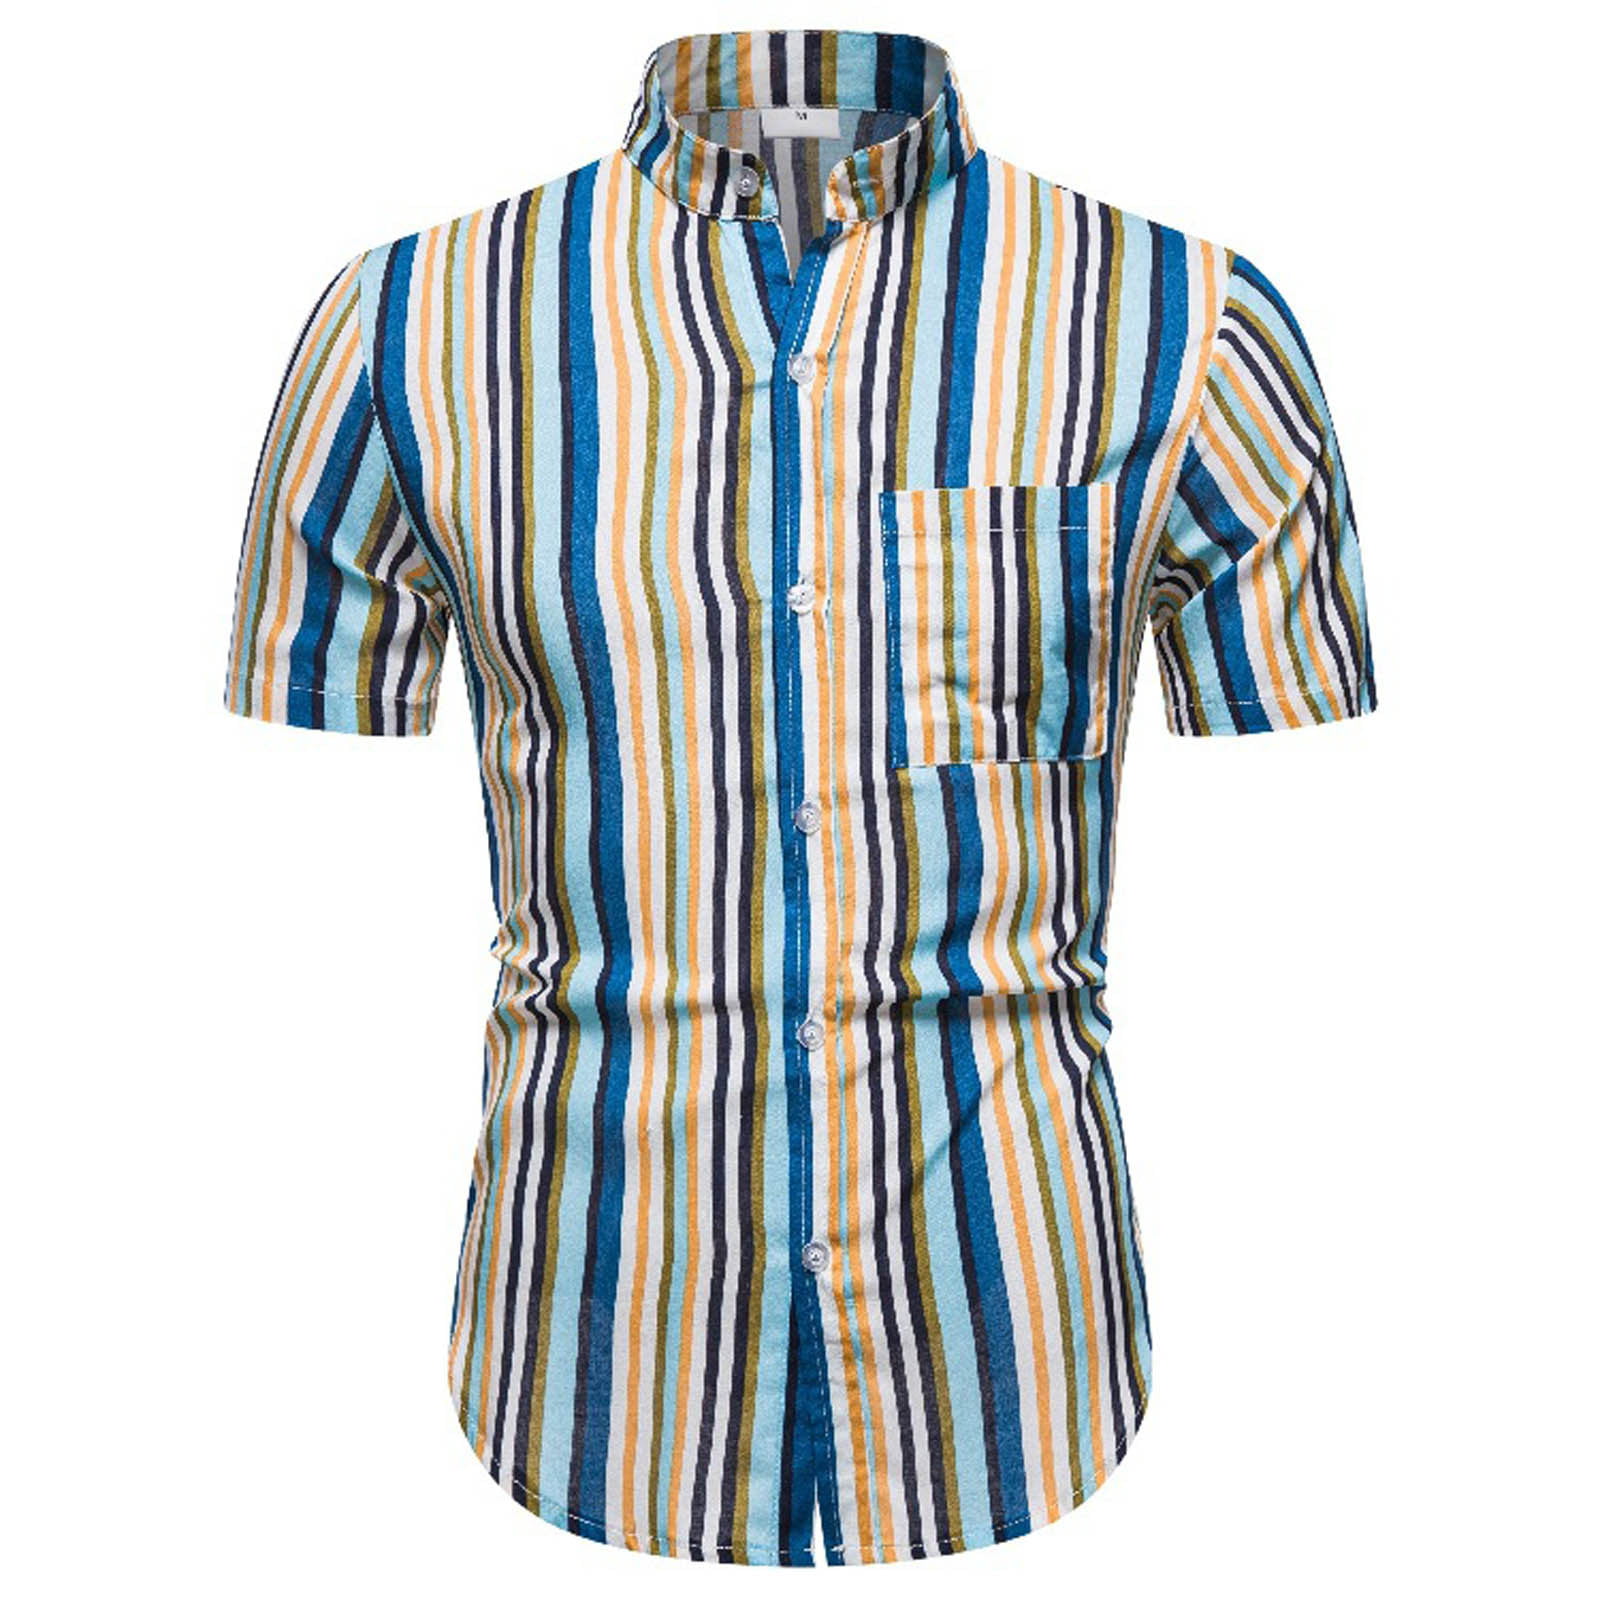 YYDGH Short Sleeve Button Down Shirts for Men Striped Hawaiian Summer ...